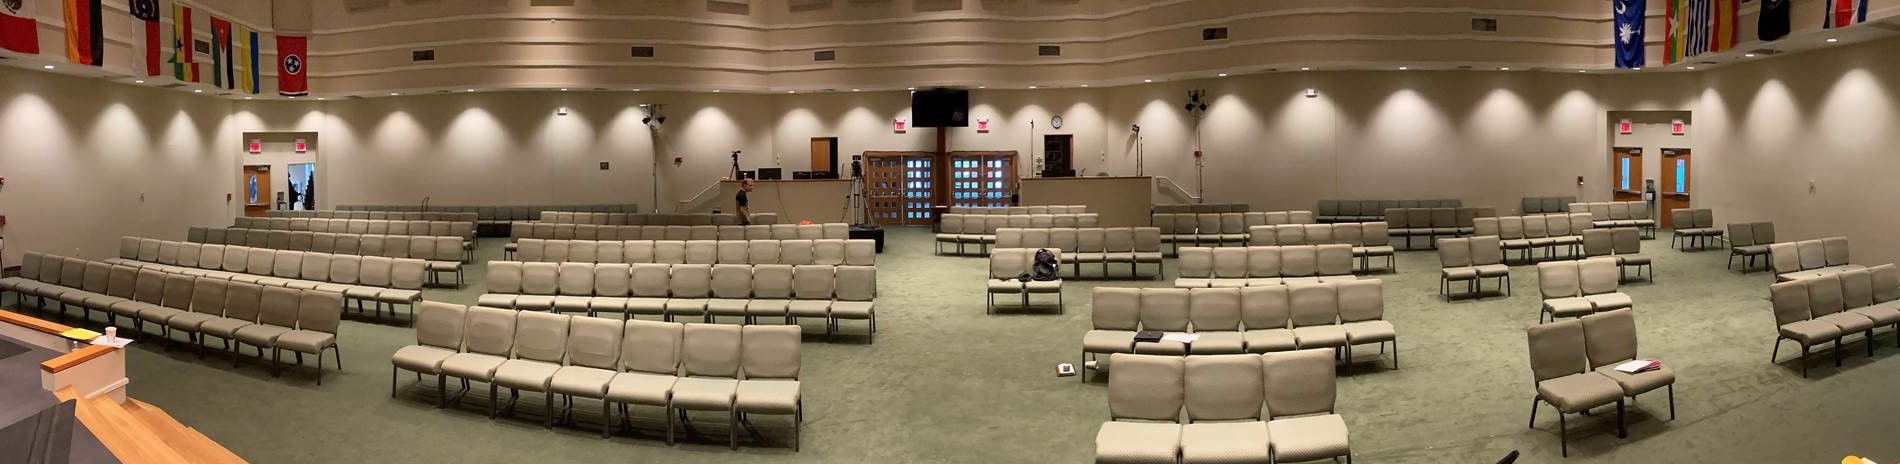 worship center